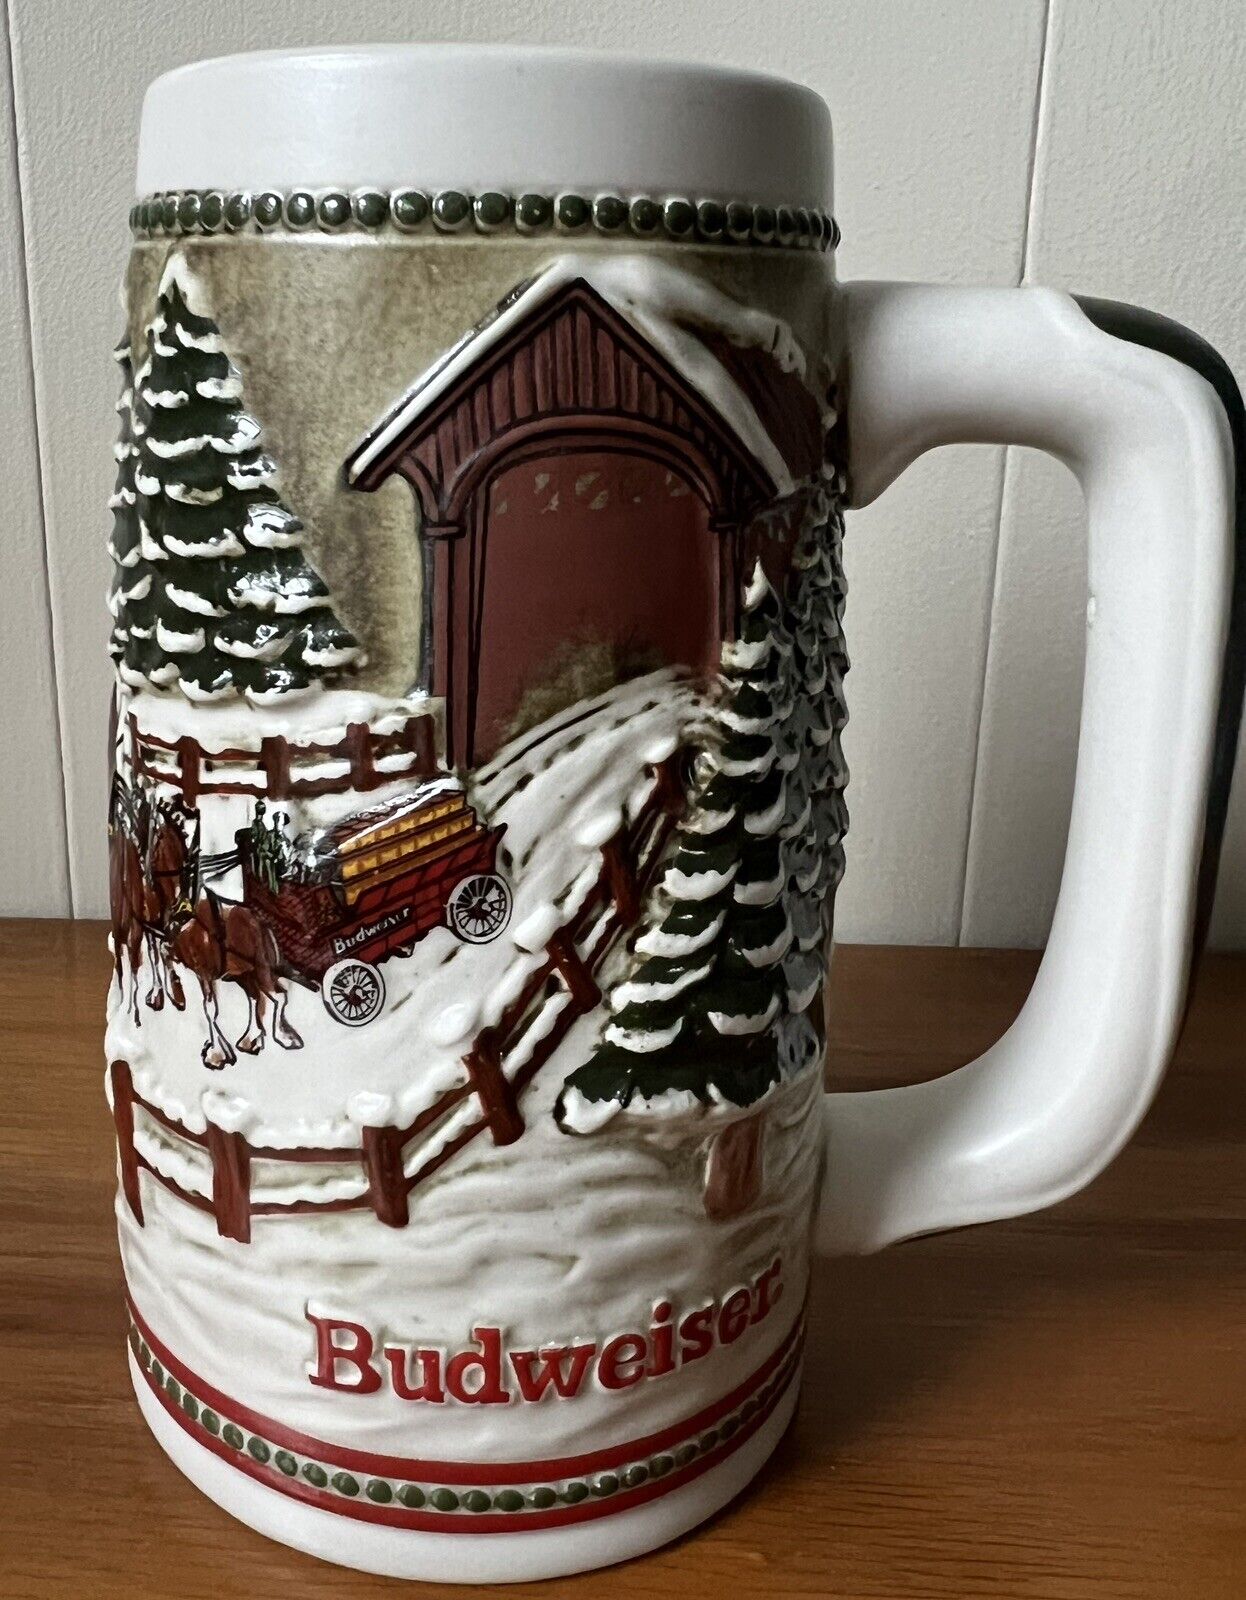 Vtg 1985 Anheuser Busch Budweiser Clydesdales Collector's Series Beer Stein Mug